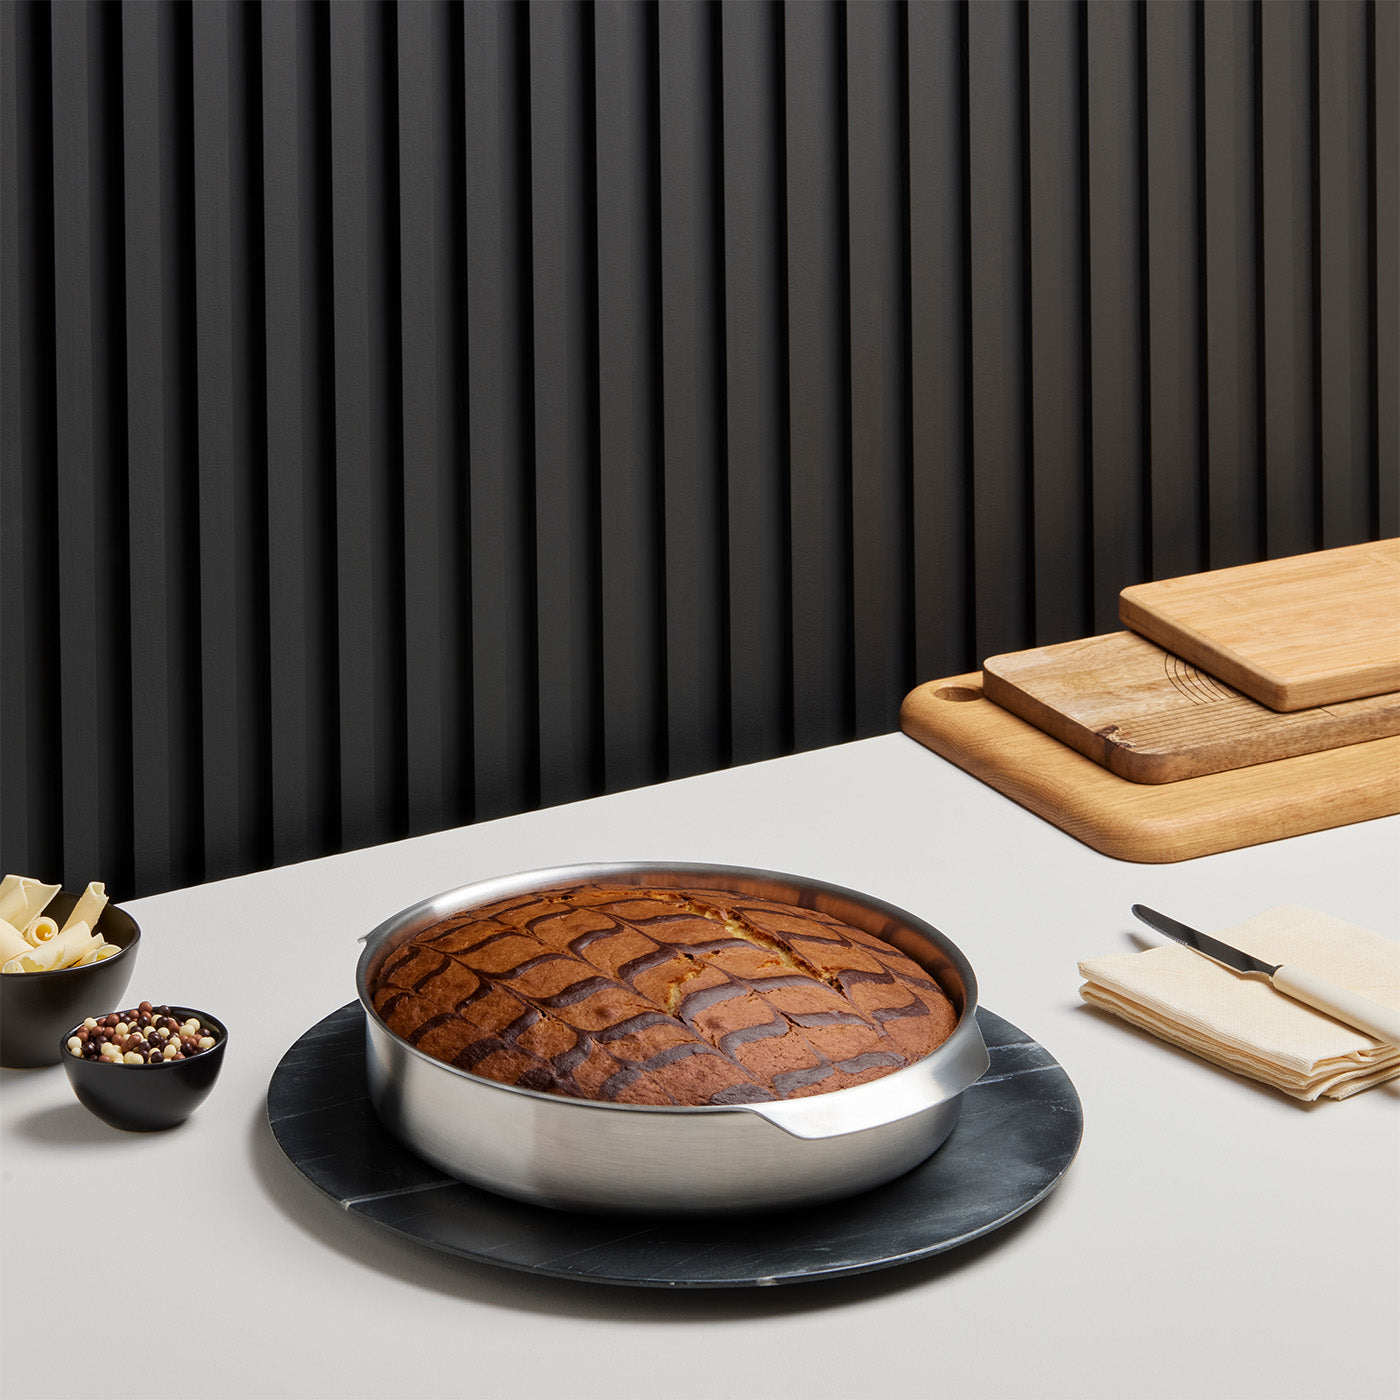 6-Inch Round Stainless Steel Cake Pan – Kana